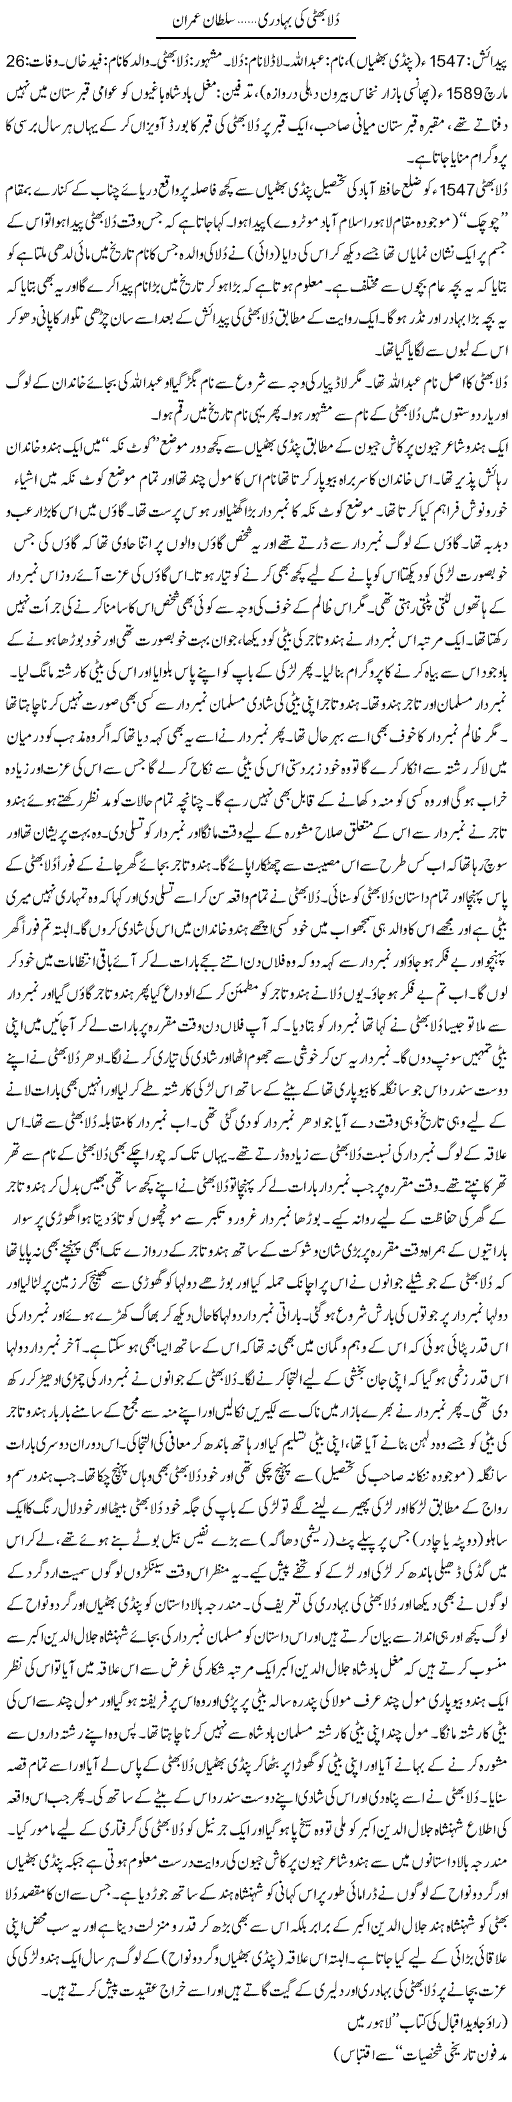 Dulla Bhatti Ki Bahaduri | Sultan Imran | Daily Urdu Columns